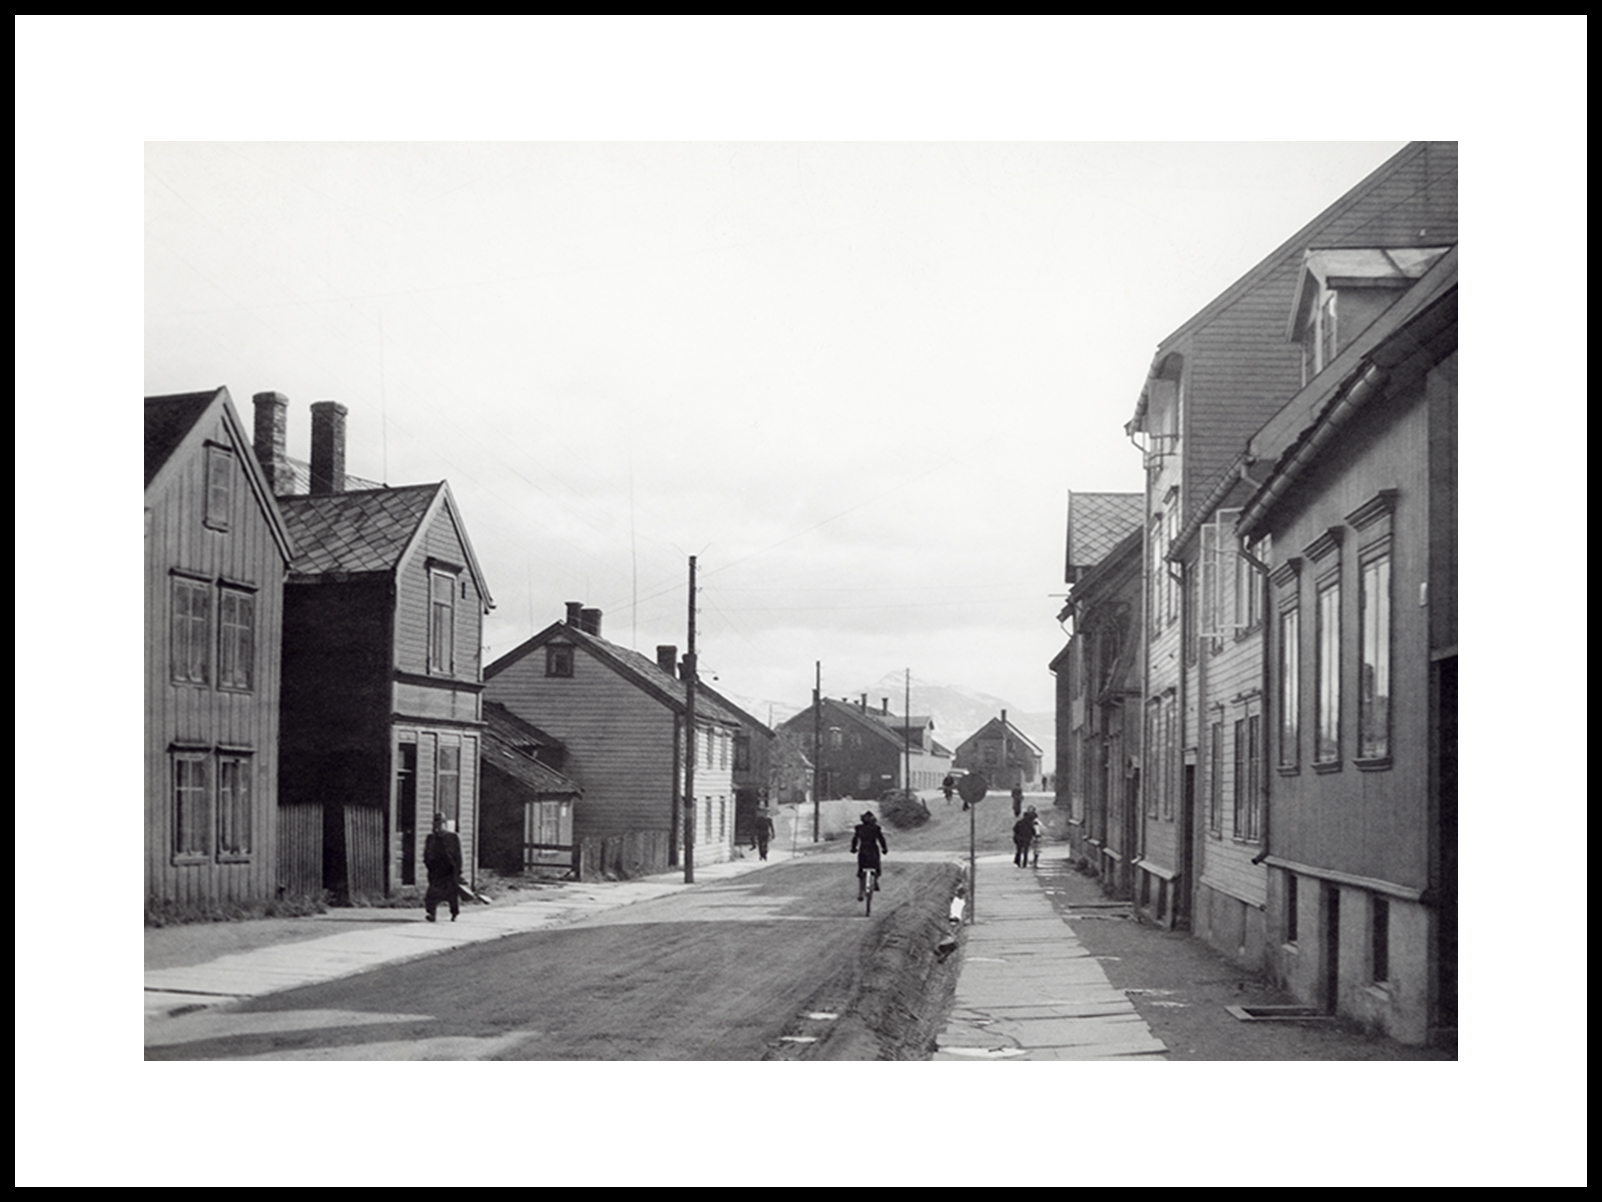 Storgaten, Tromsø, 1950’s